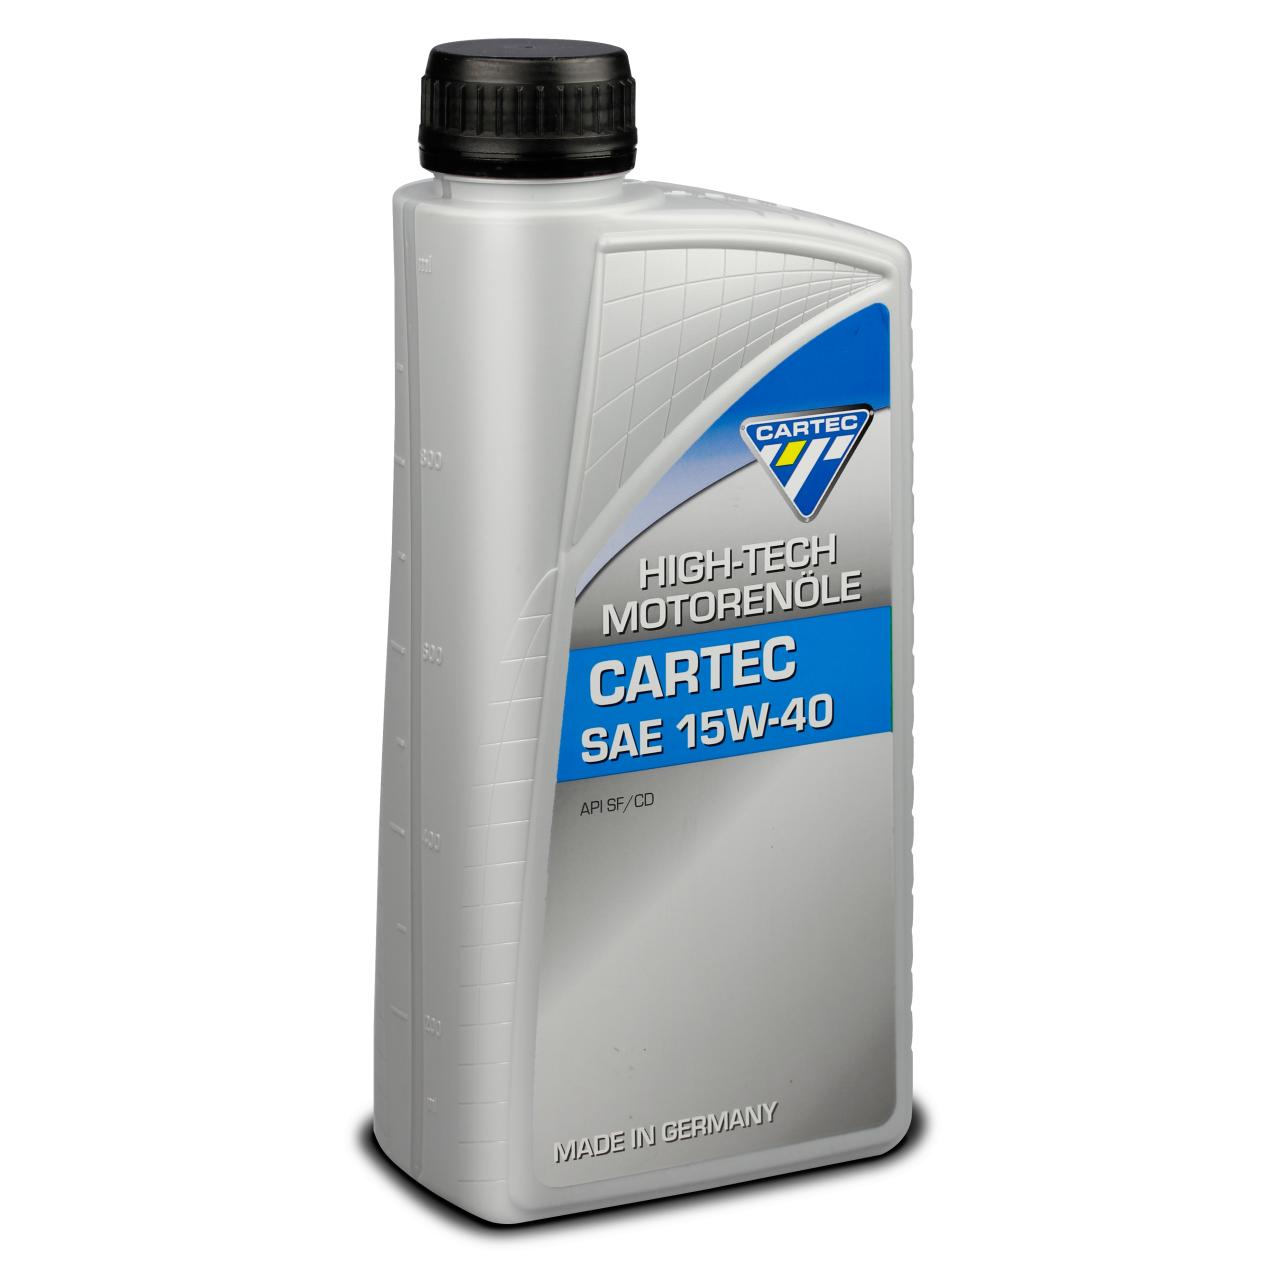 Cartec Motorenöl